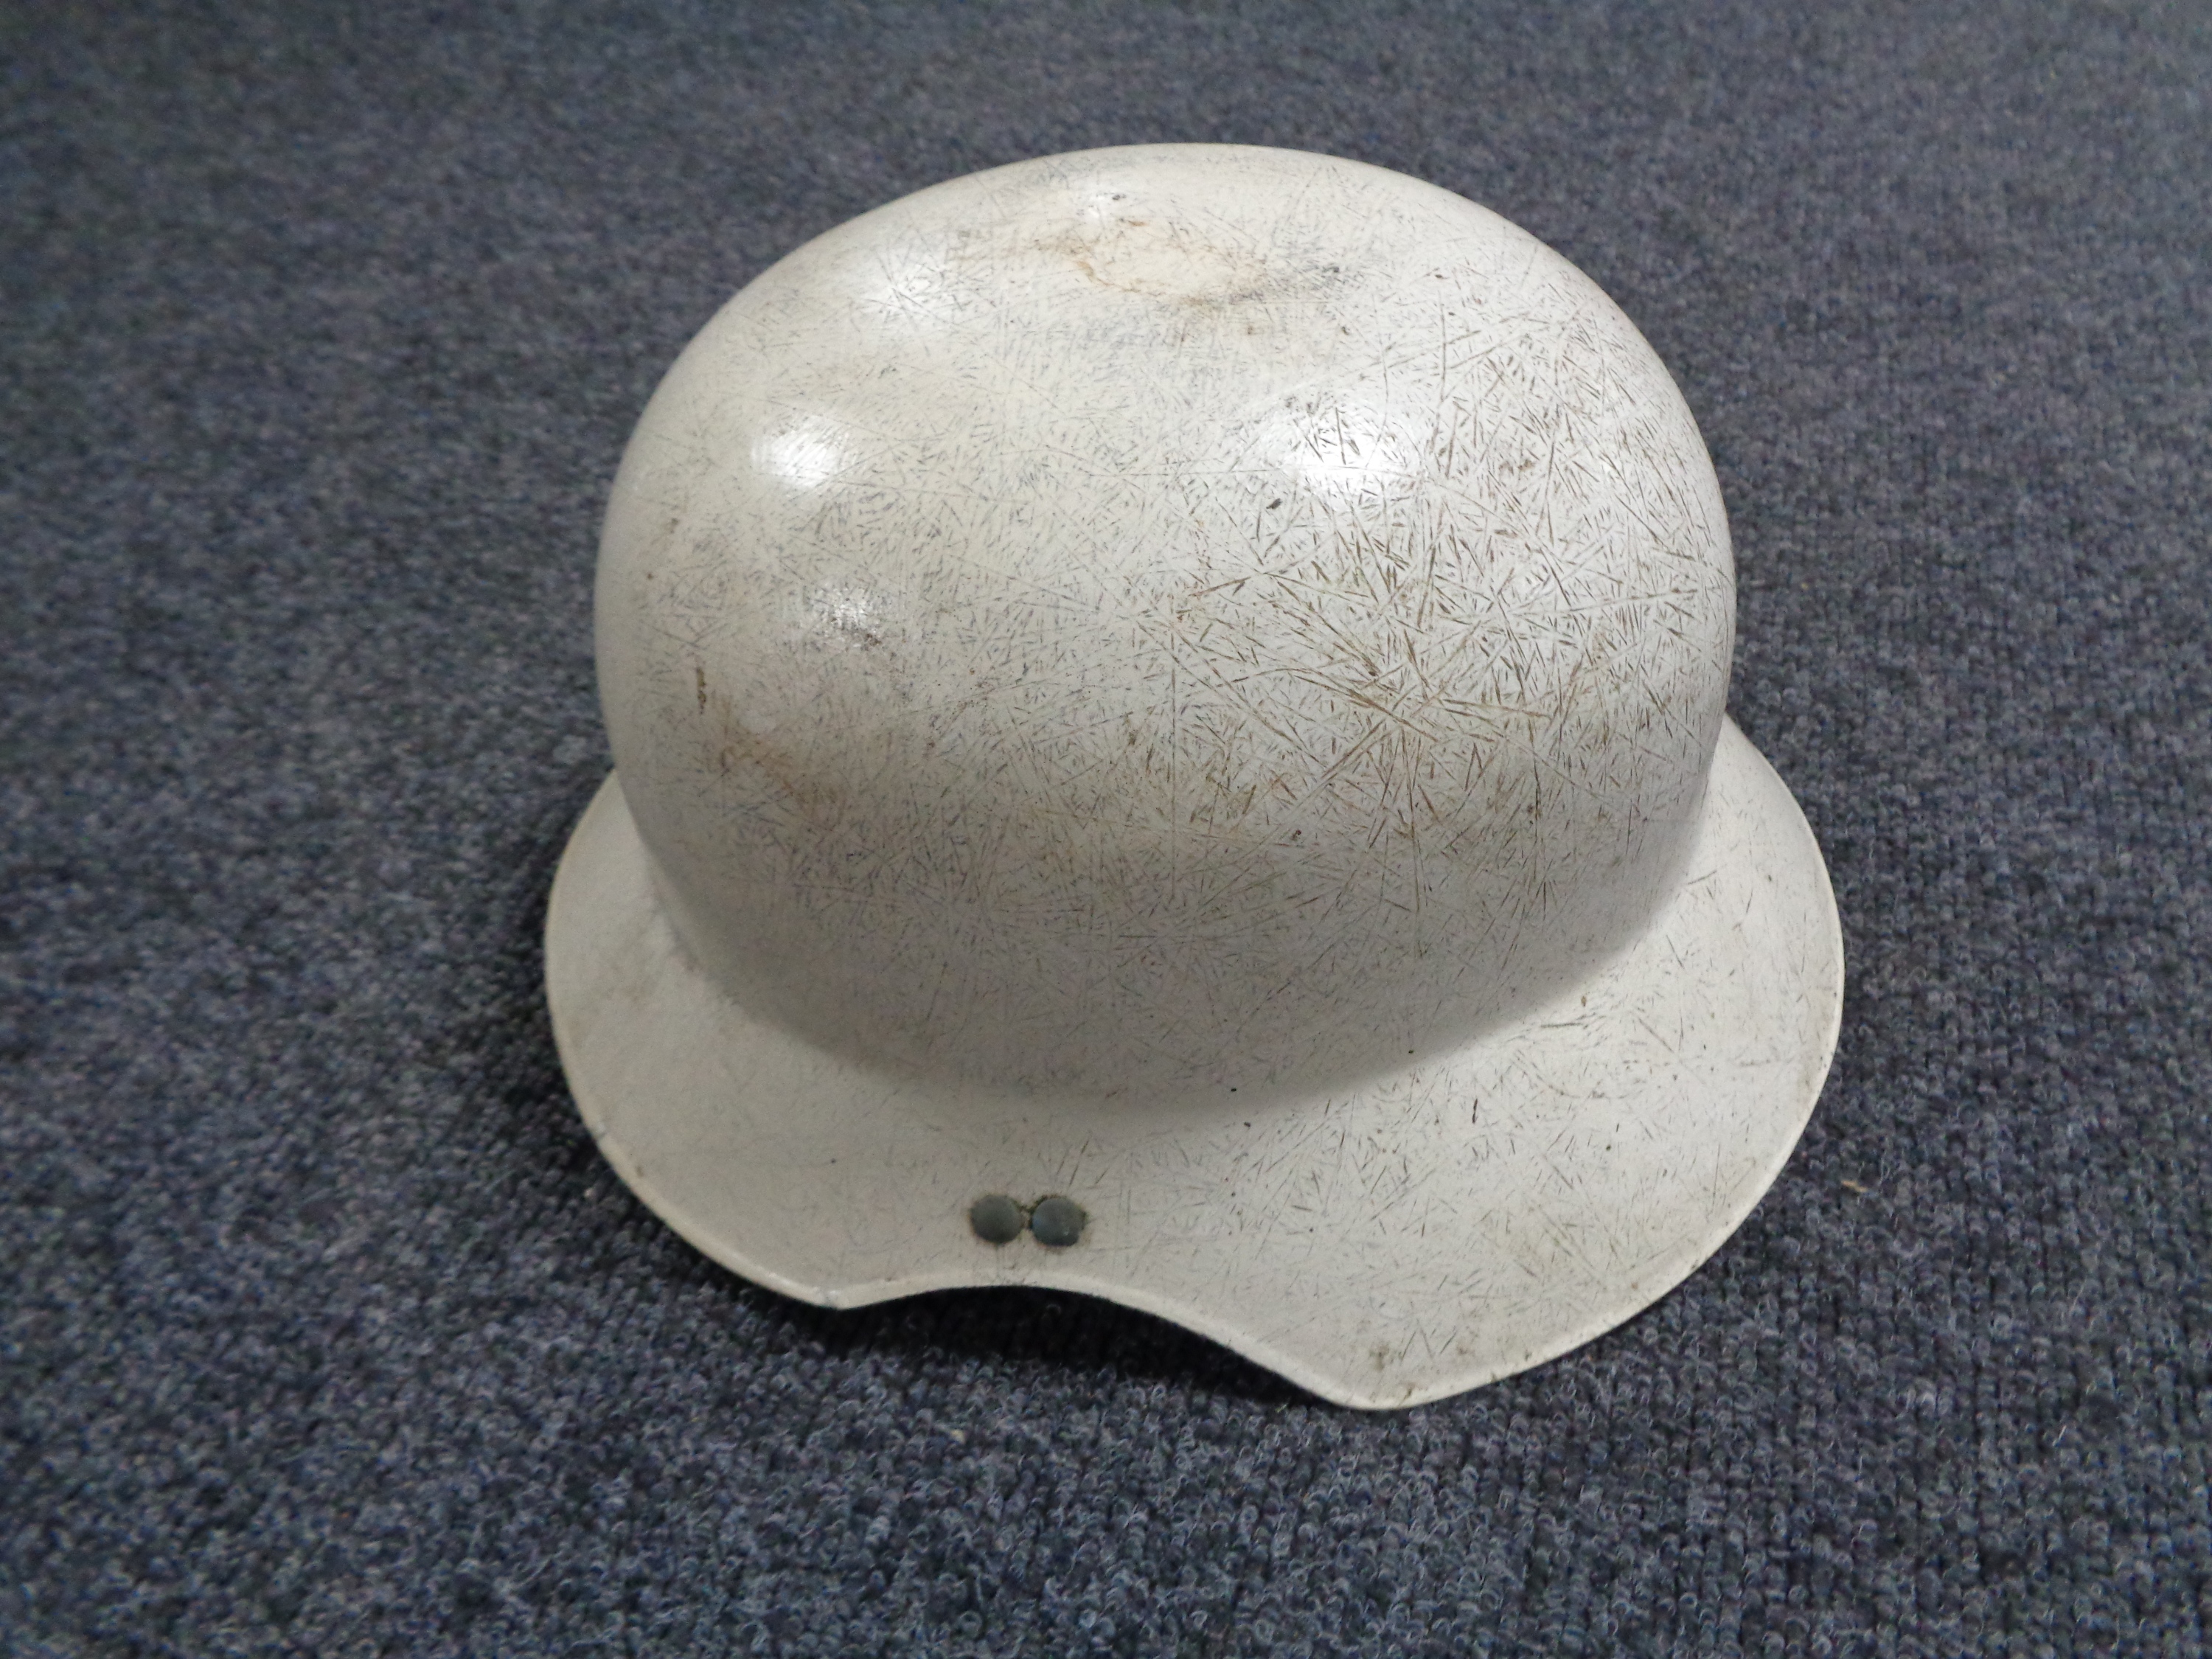 A twentieth century German military helmet